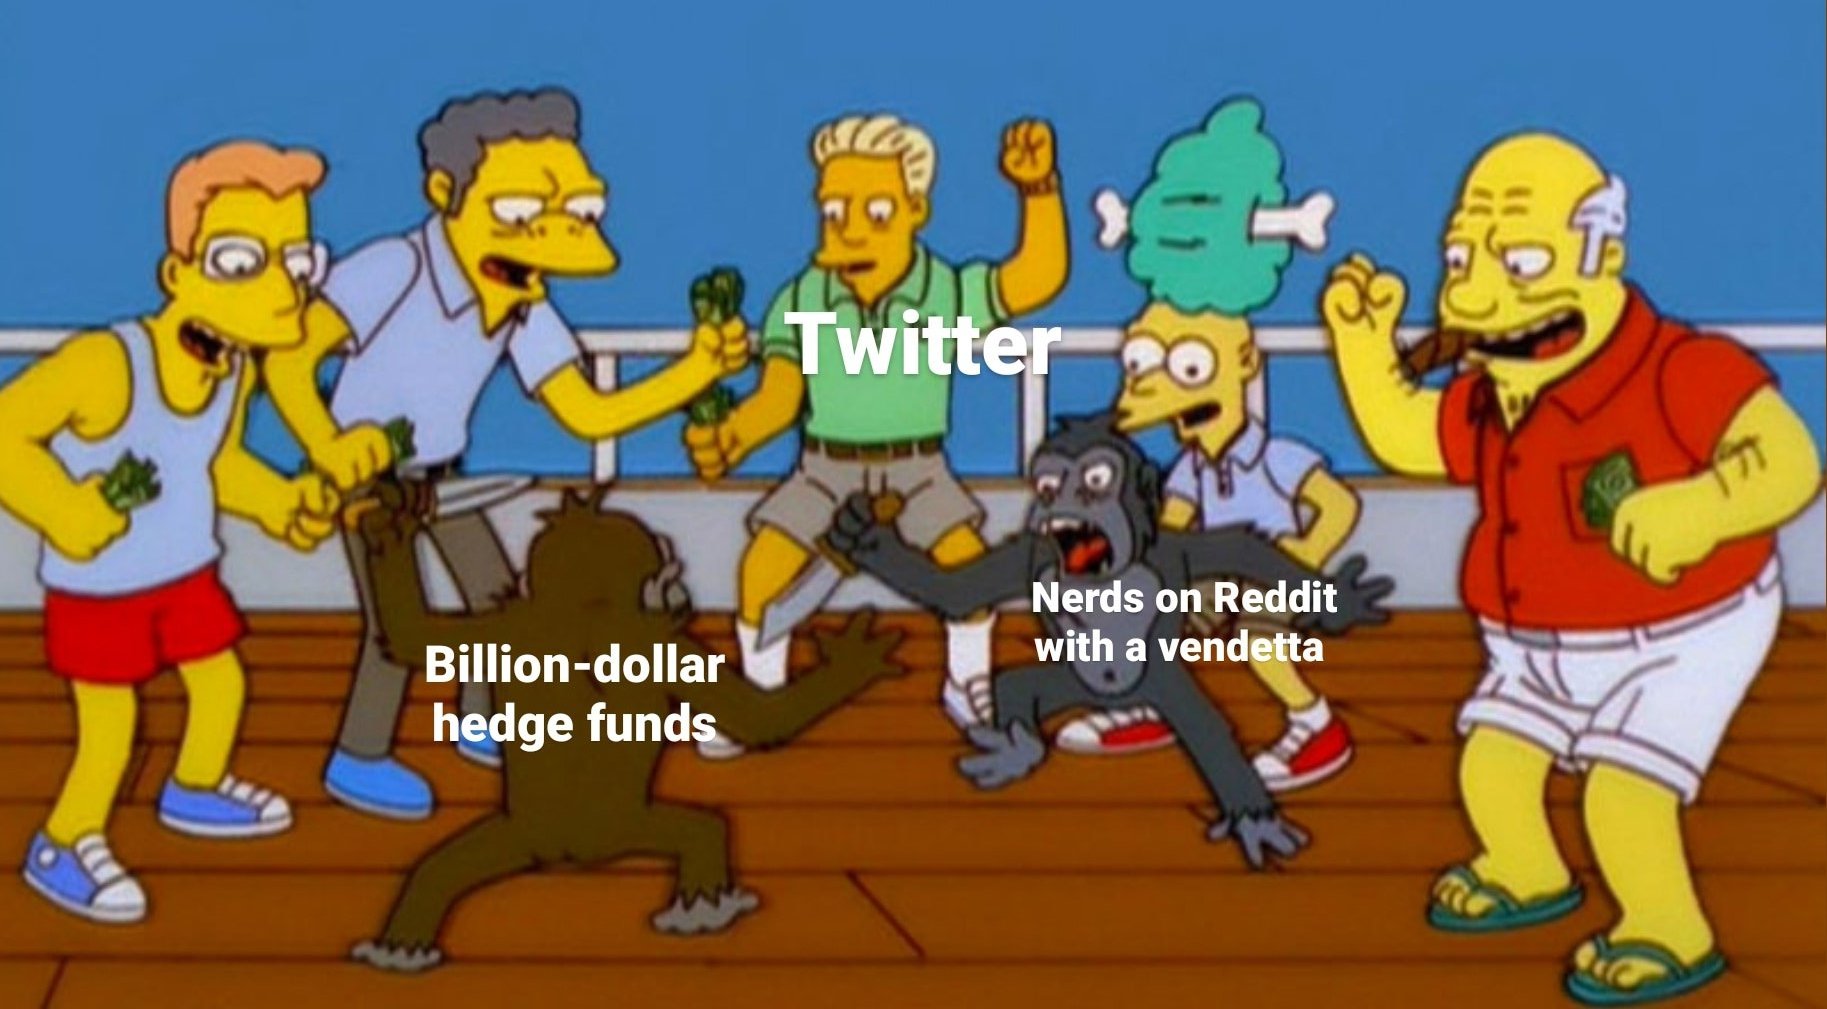 simpsons cheering on monkeys - & Twitter Nerds on Reddit with a vendetta Billiondollar hedge funds